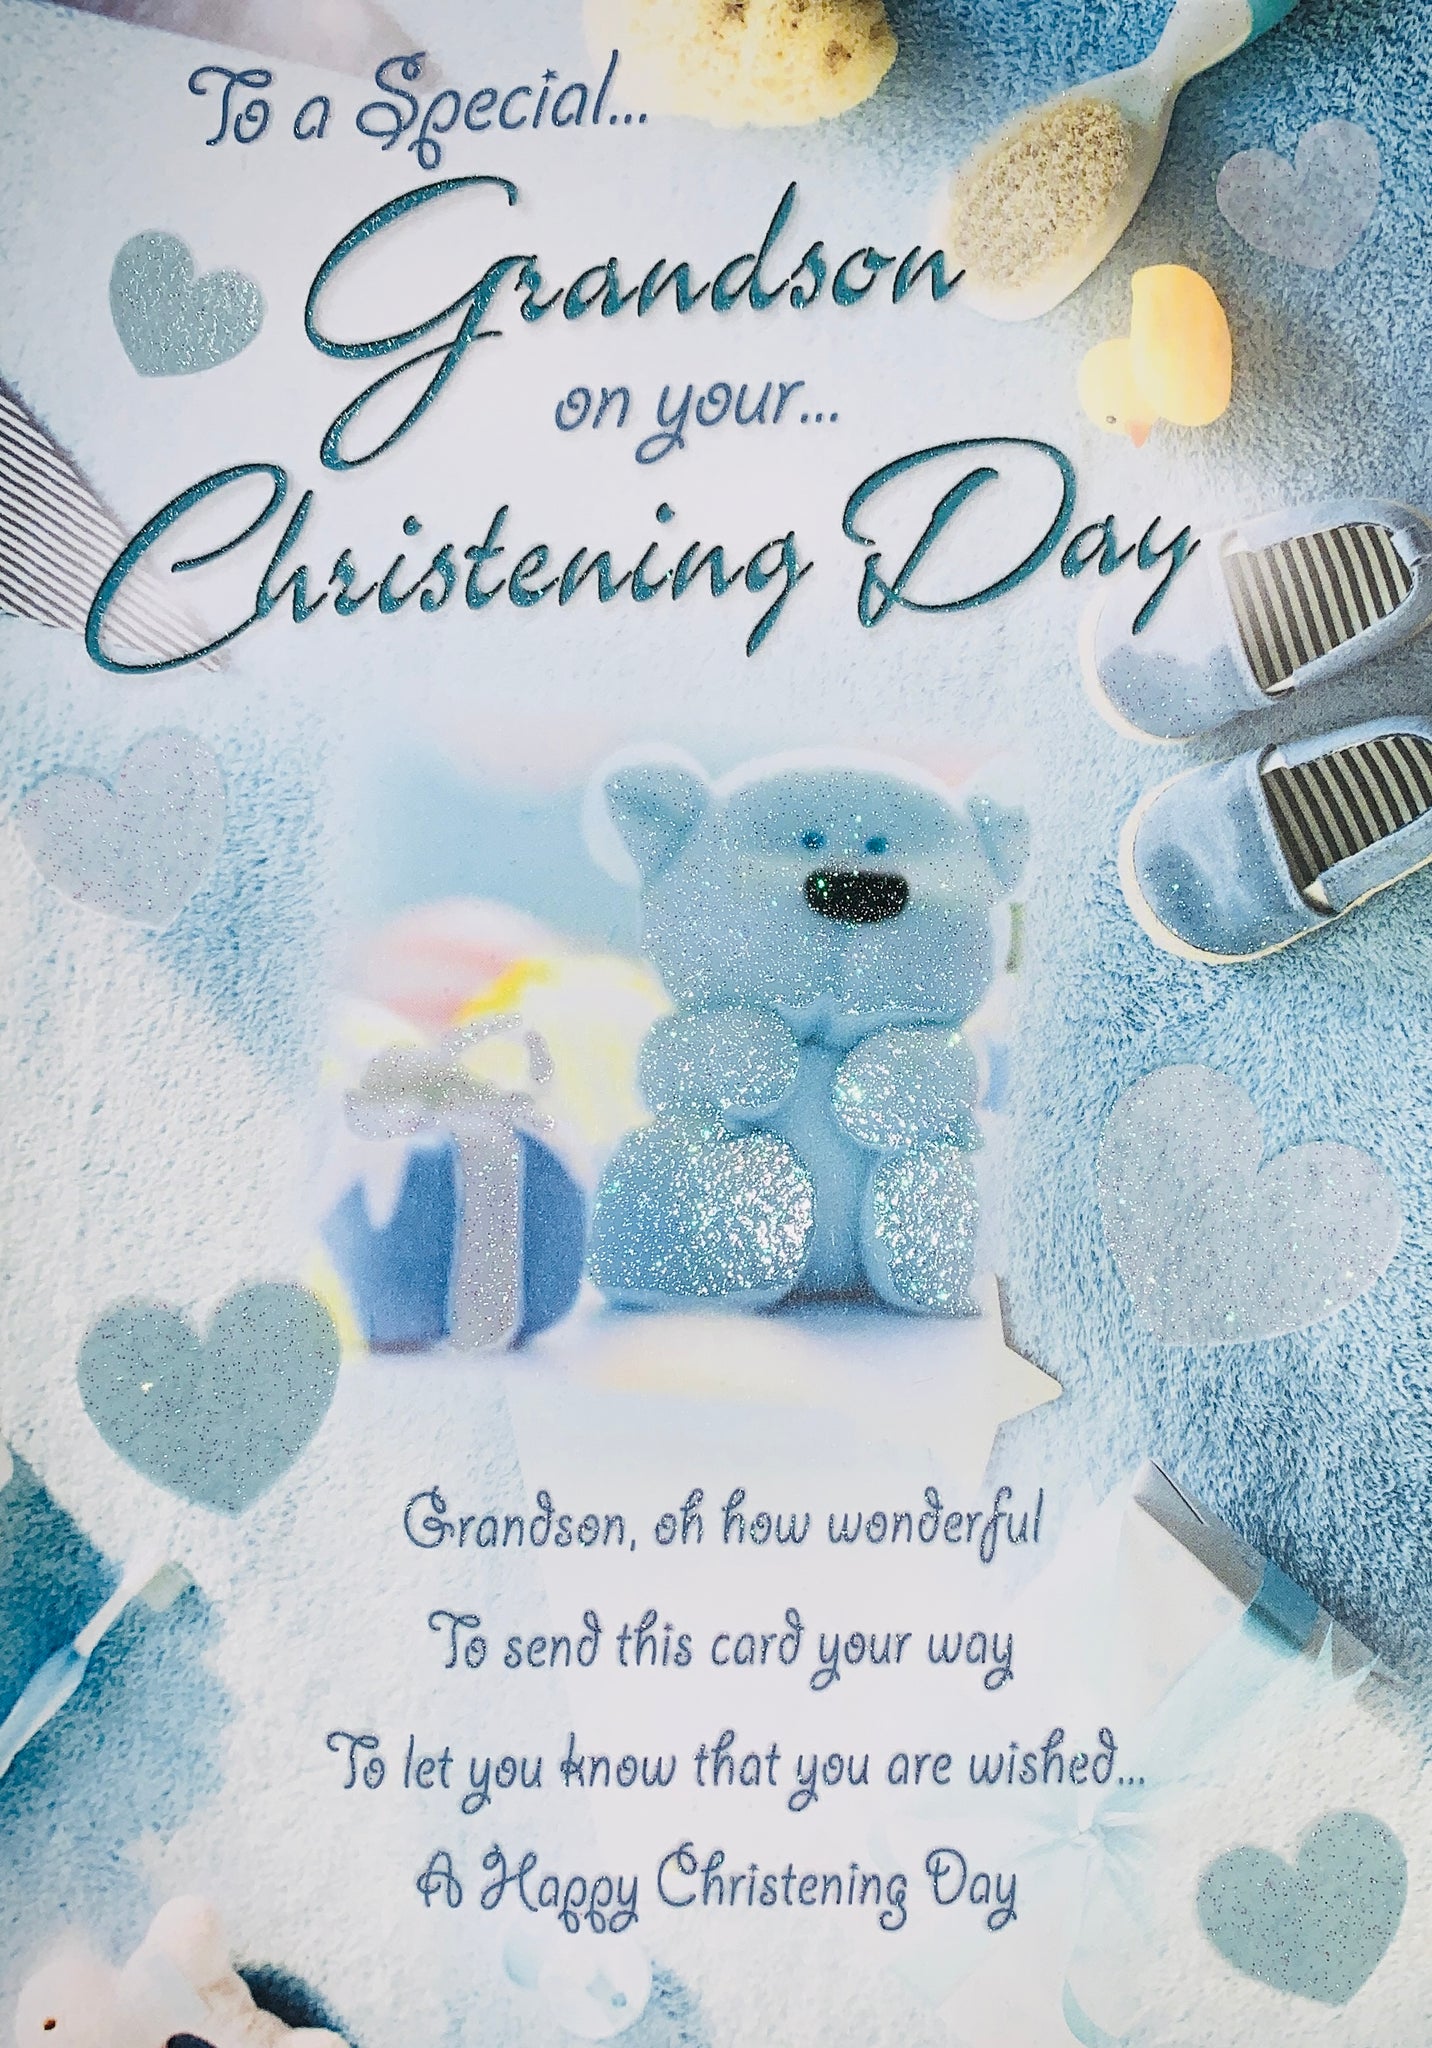 Grandson christening card